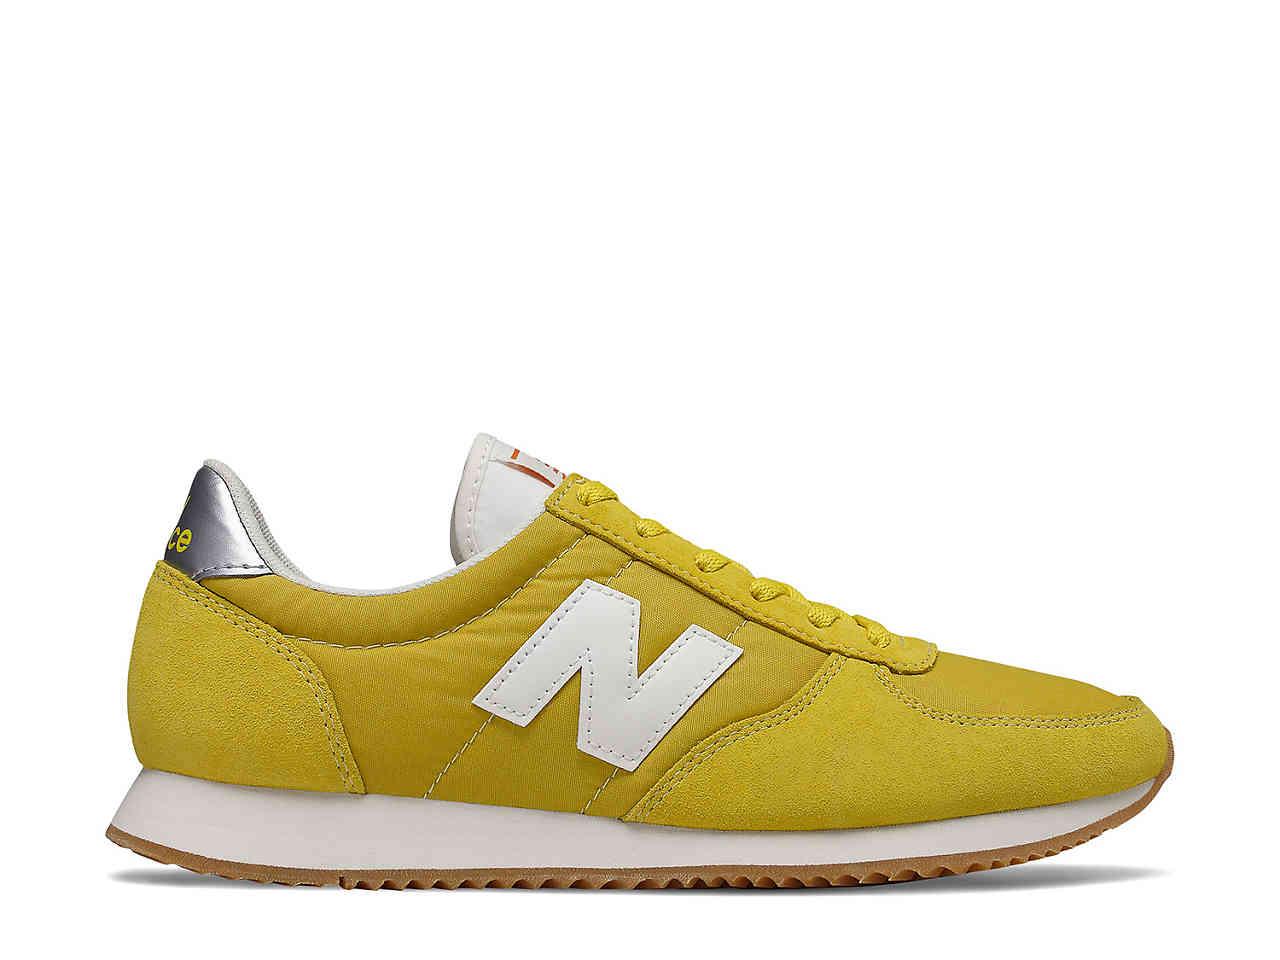 New Balance 220 Sneaker in Yellow | Lyst